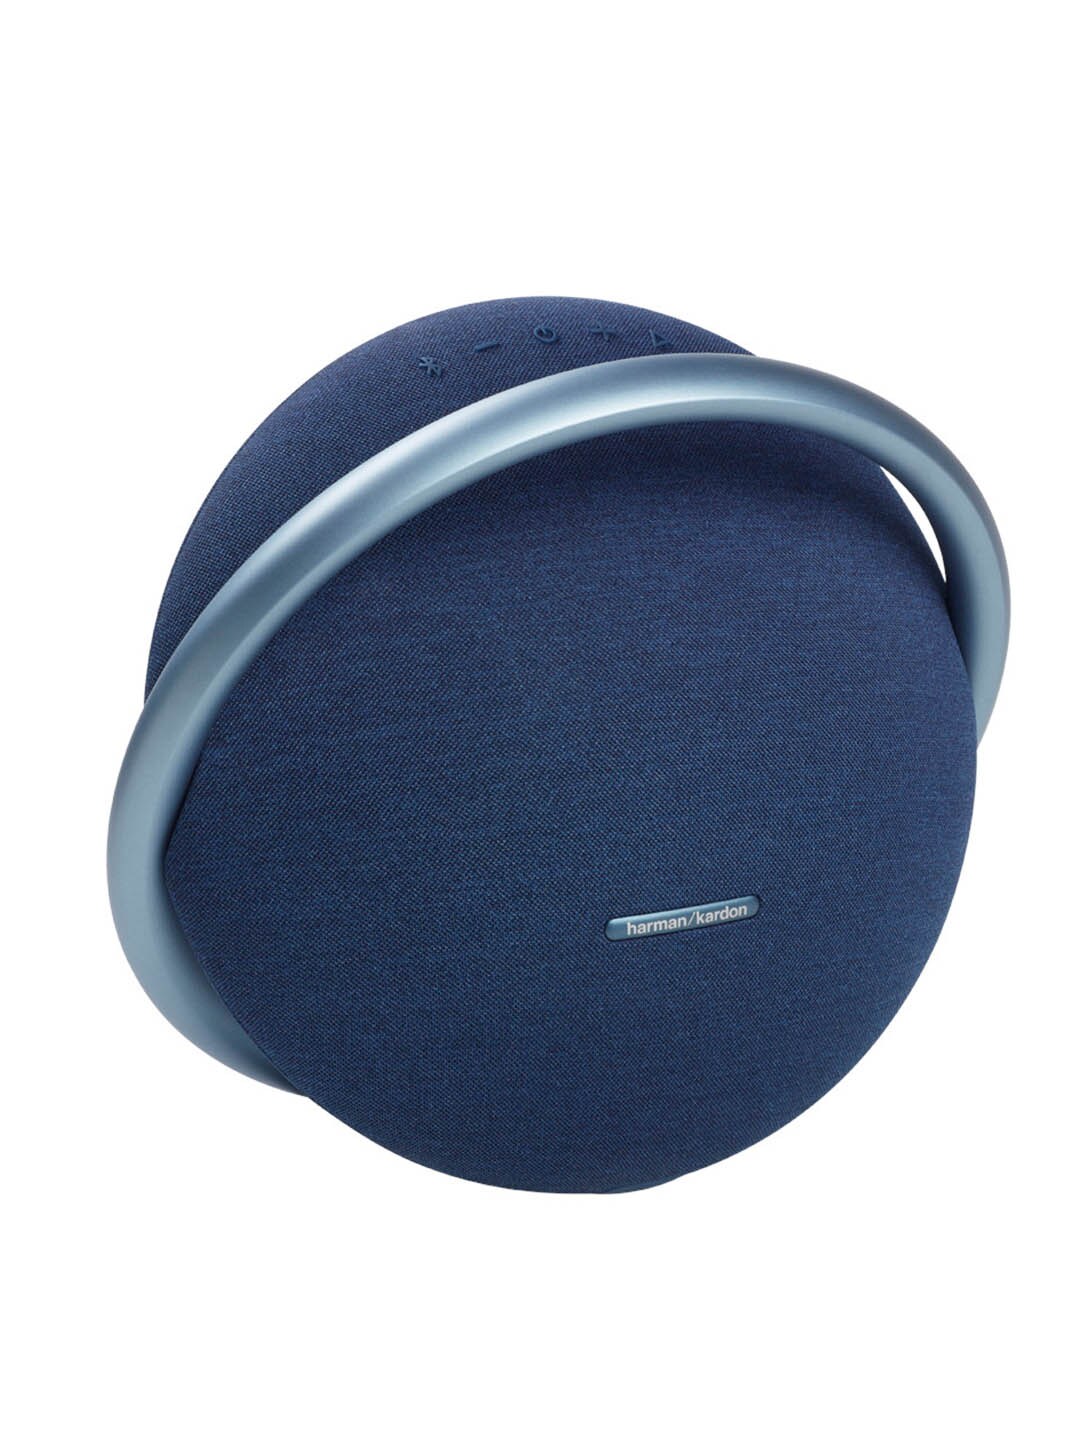 Harman Kardon Onyx Studio 7 Portable Stereo Bluetooth Speaker - Blue Price in India